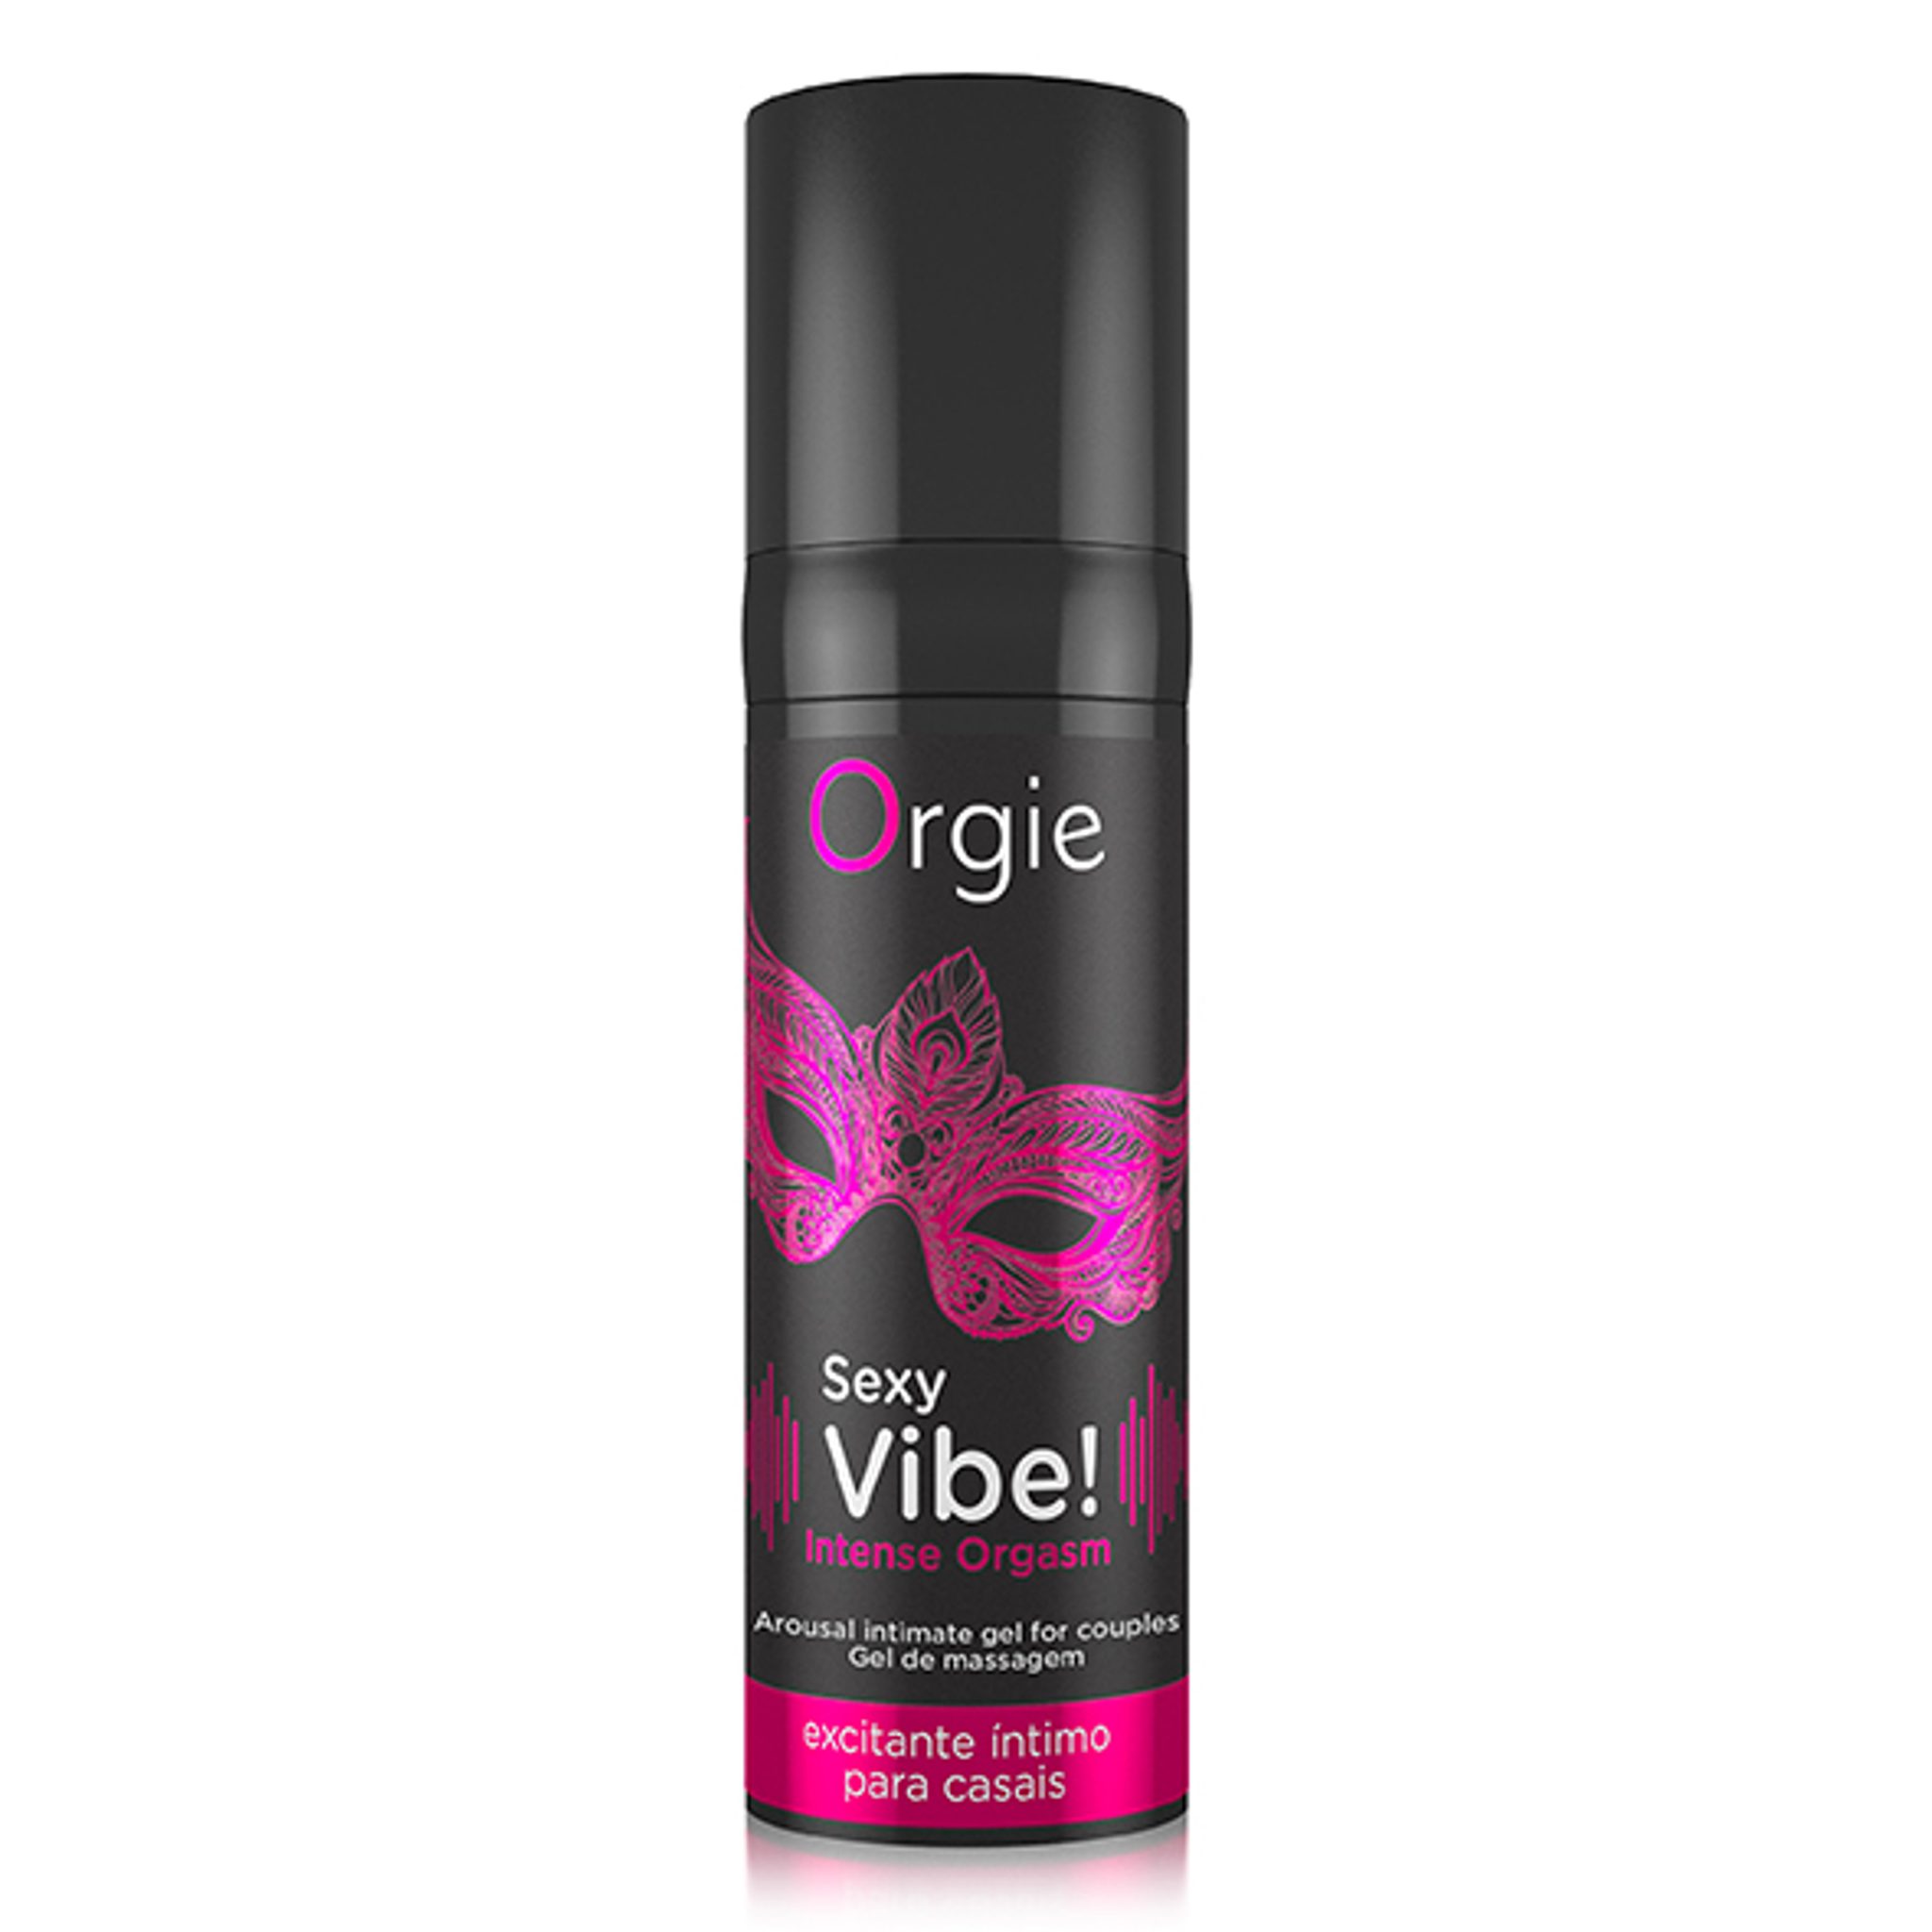 Orgie Sexy Vibe! Intense Orgasm 15 ml